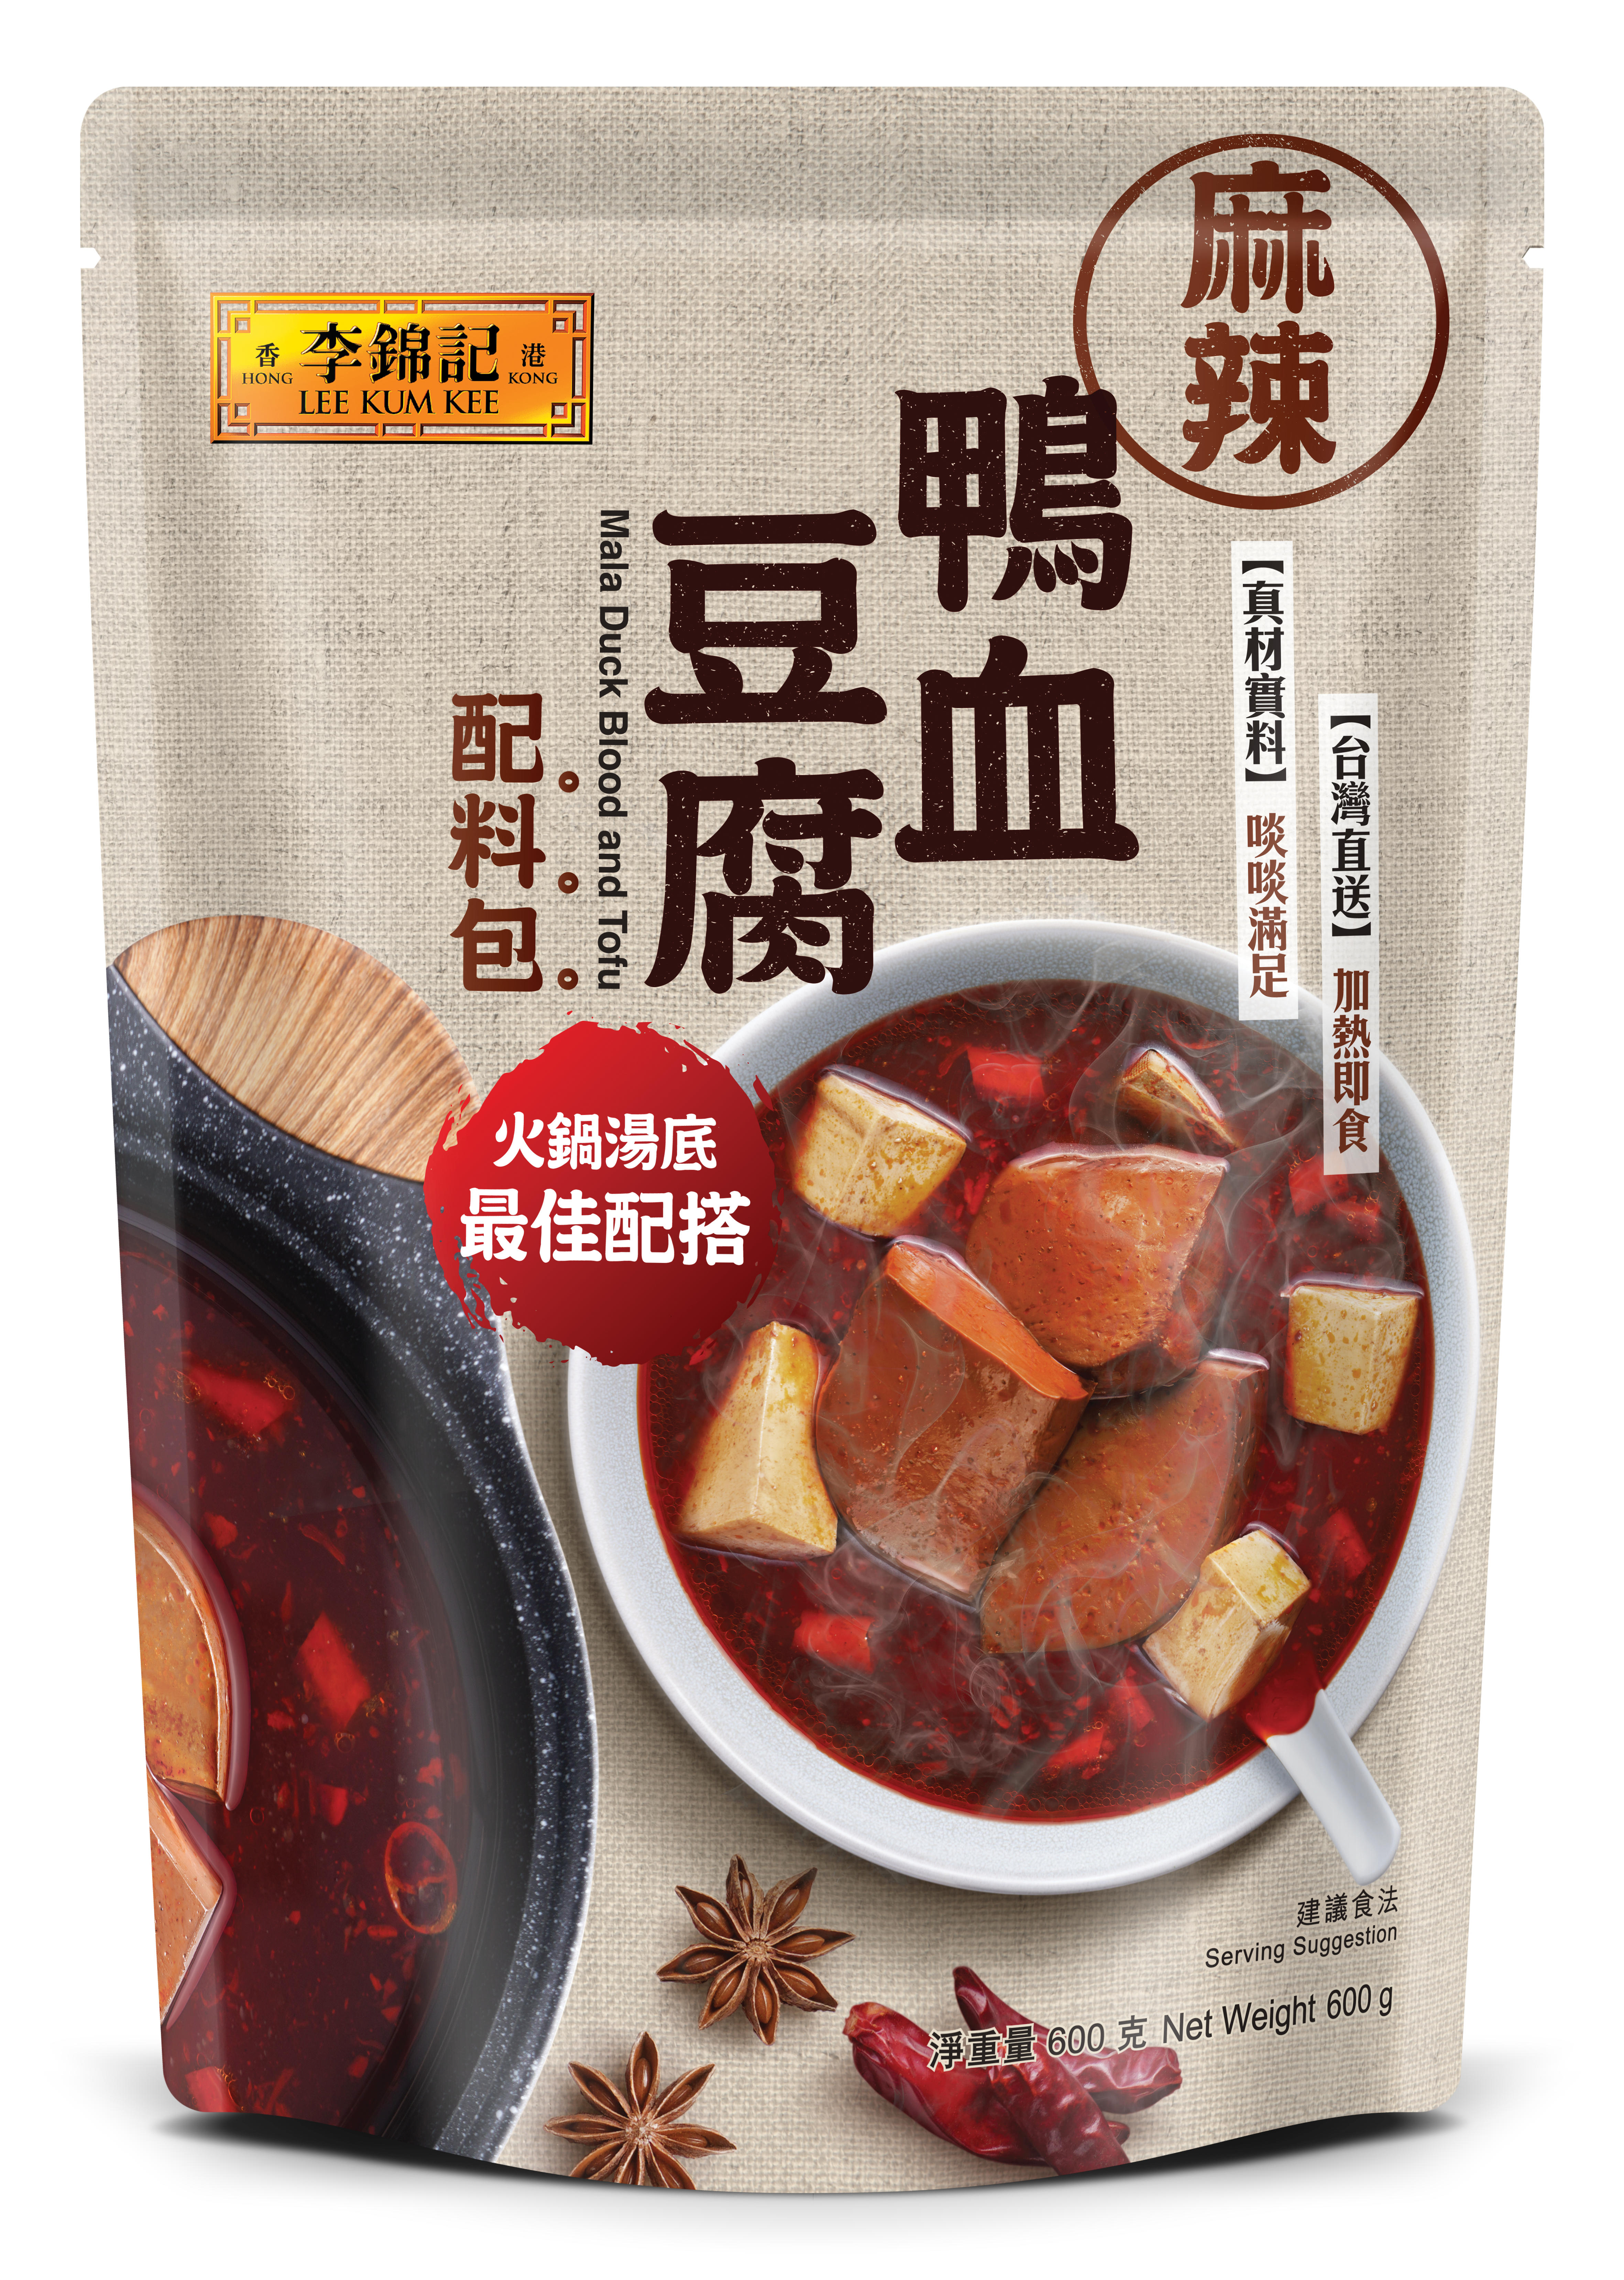 HK_Product_720_Mala Duck Blood and Tofu 600g_V2